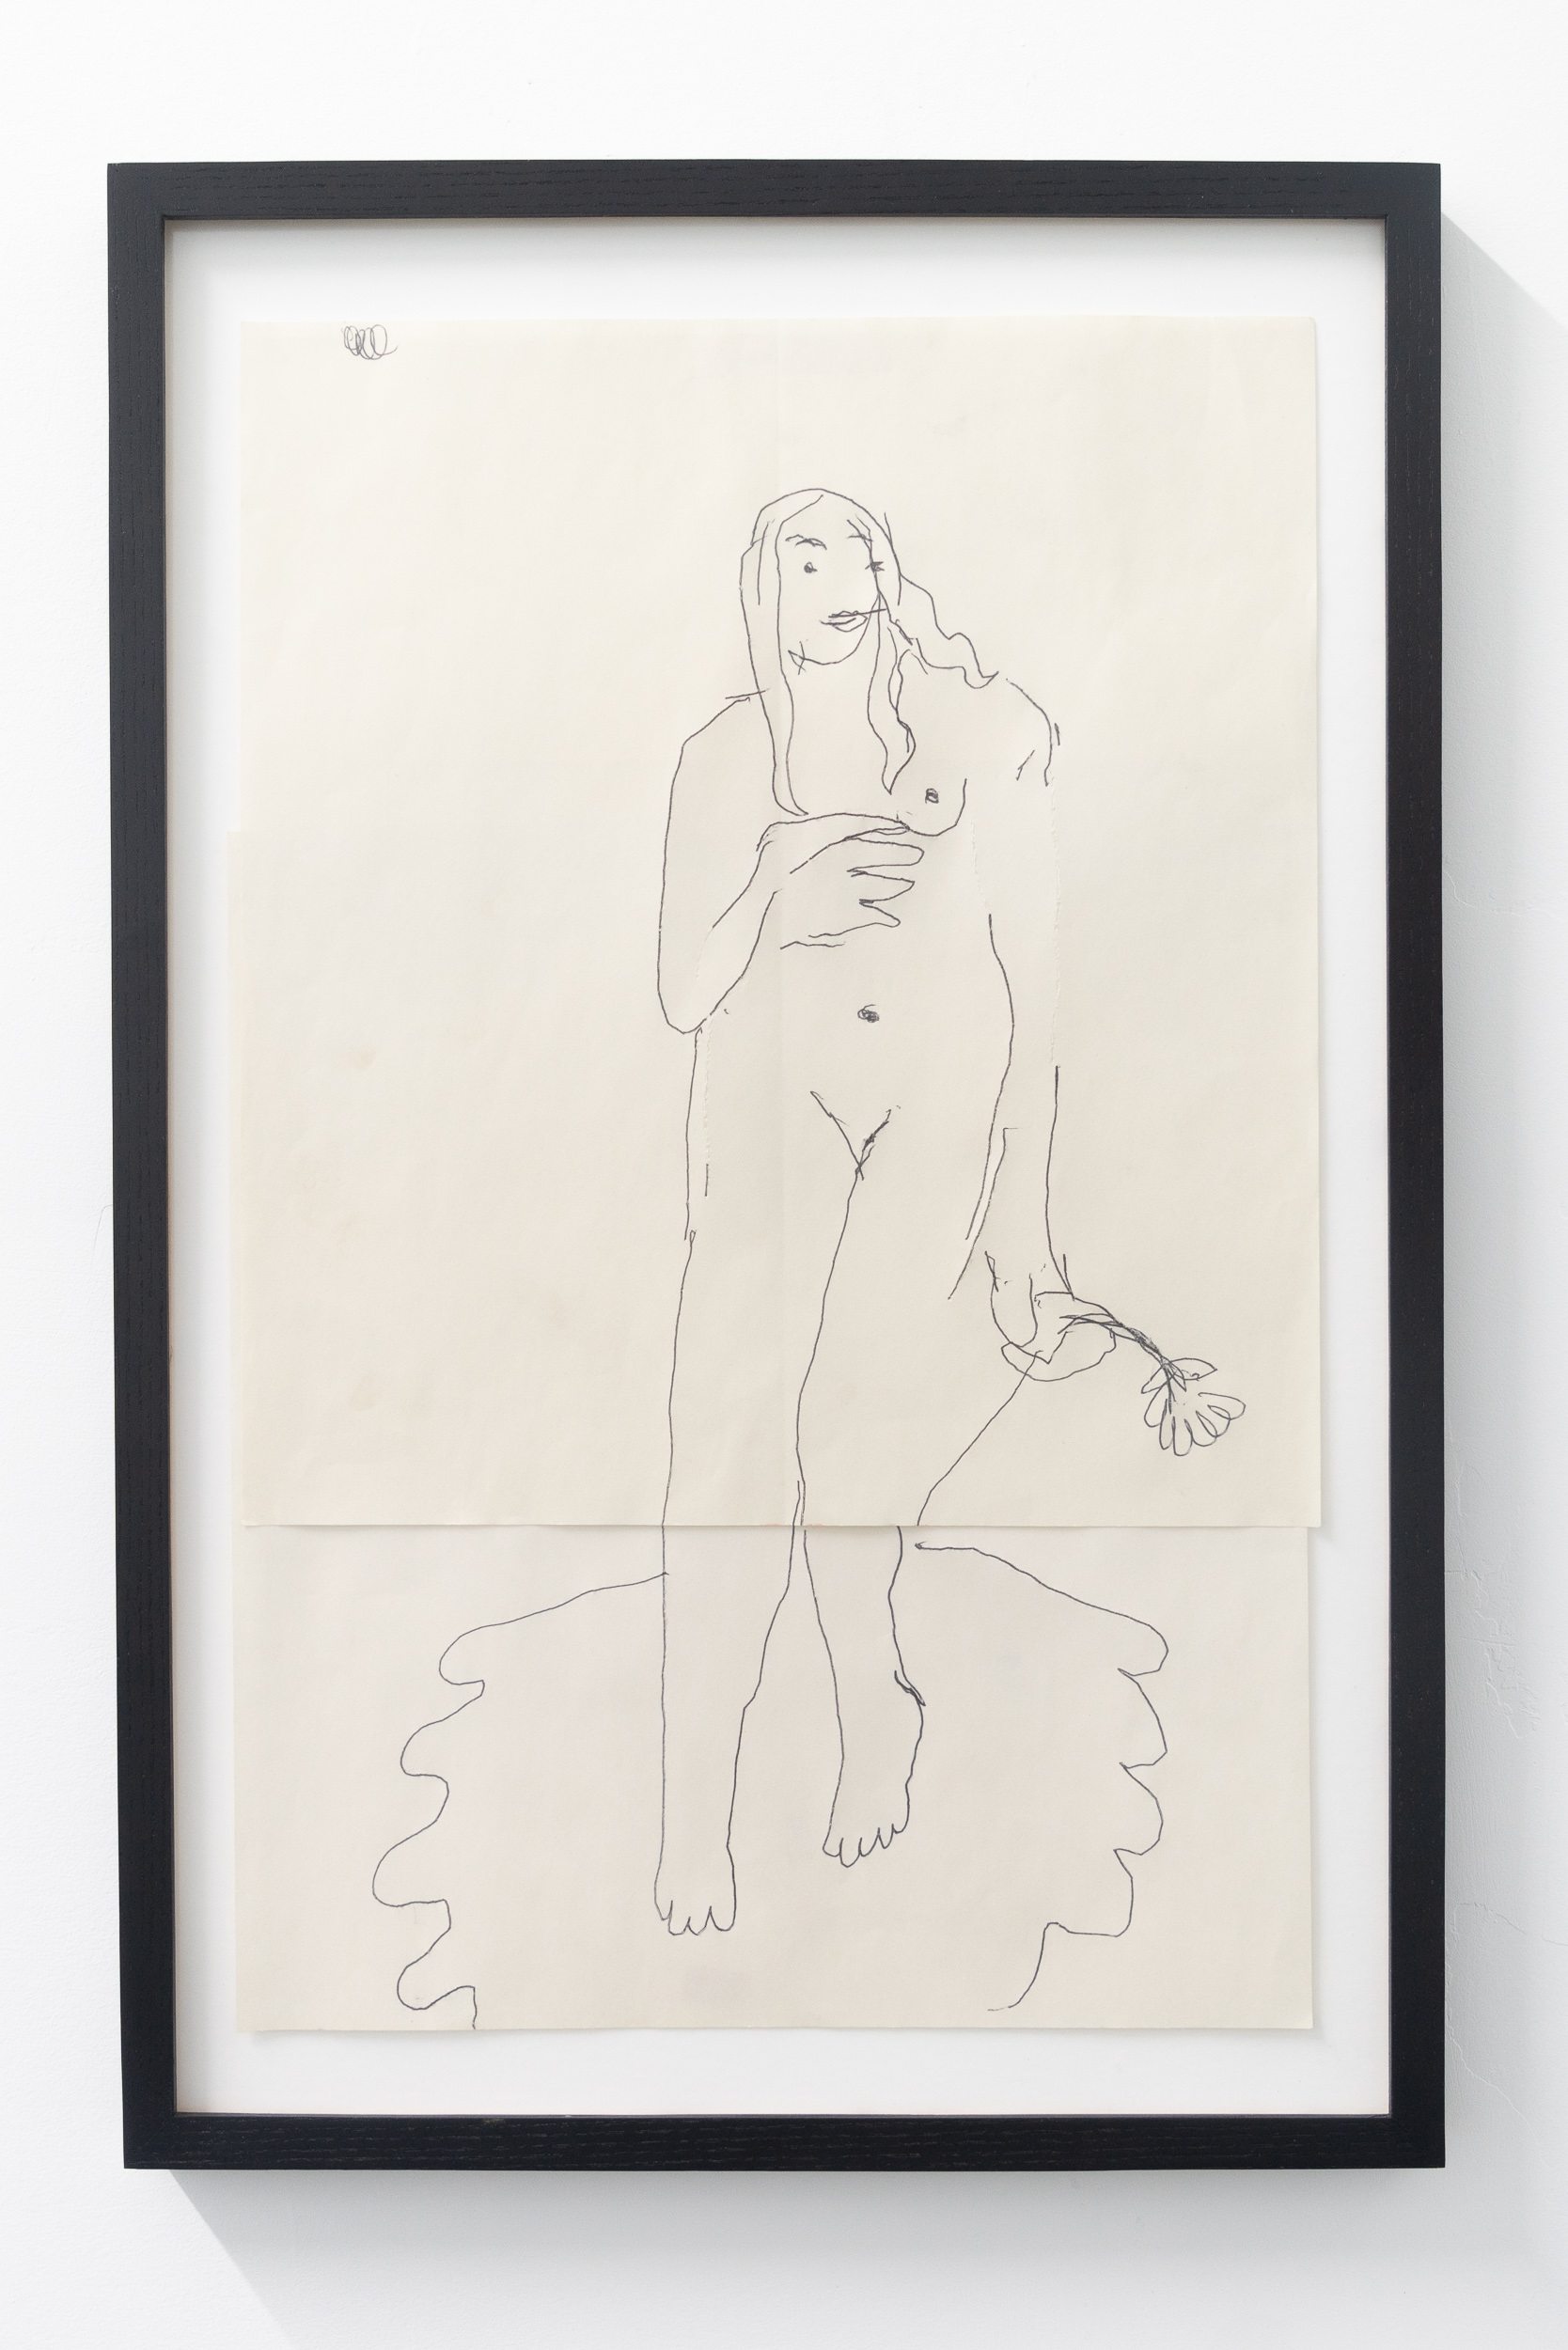  Emilie Gossiaux,  Venus , 2018, ink on newsprint, 26 1/2 x 17 1/2 inches 